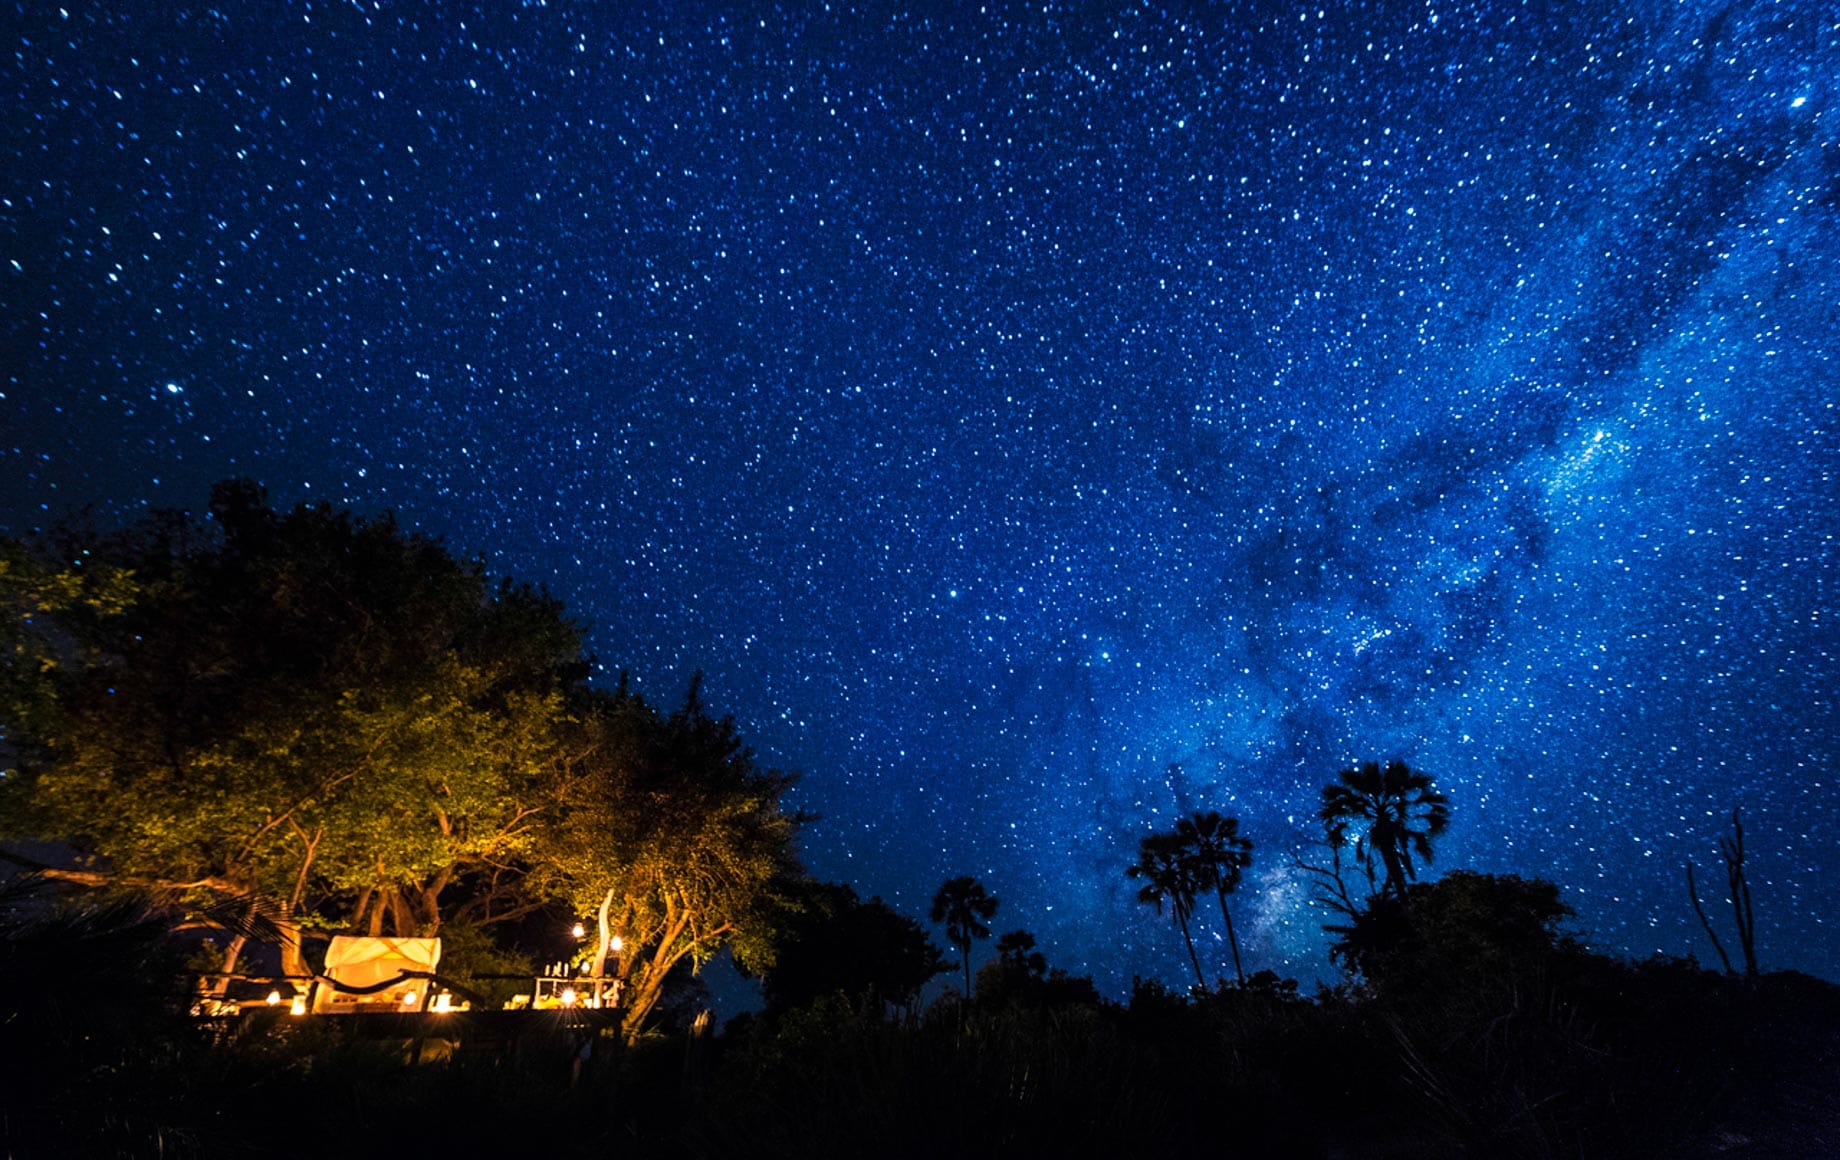 The Milky Way above an illuminated man and tree in Namibia's Okavango Delta.